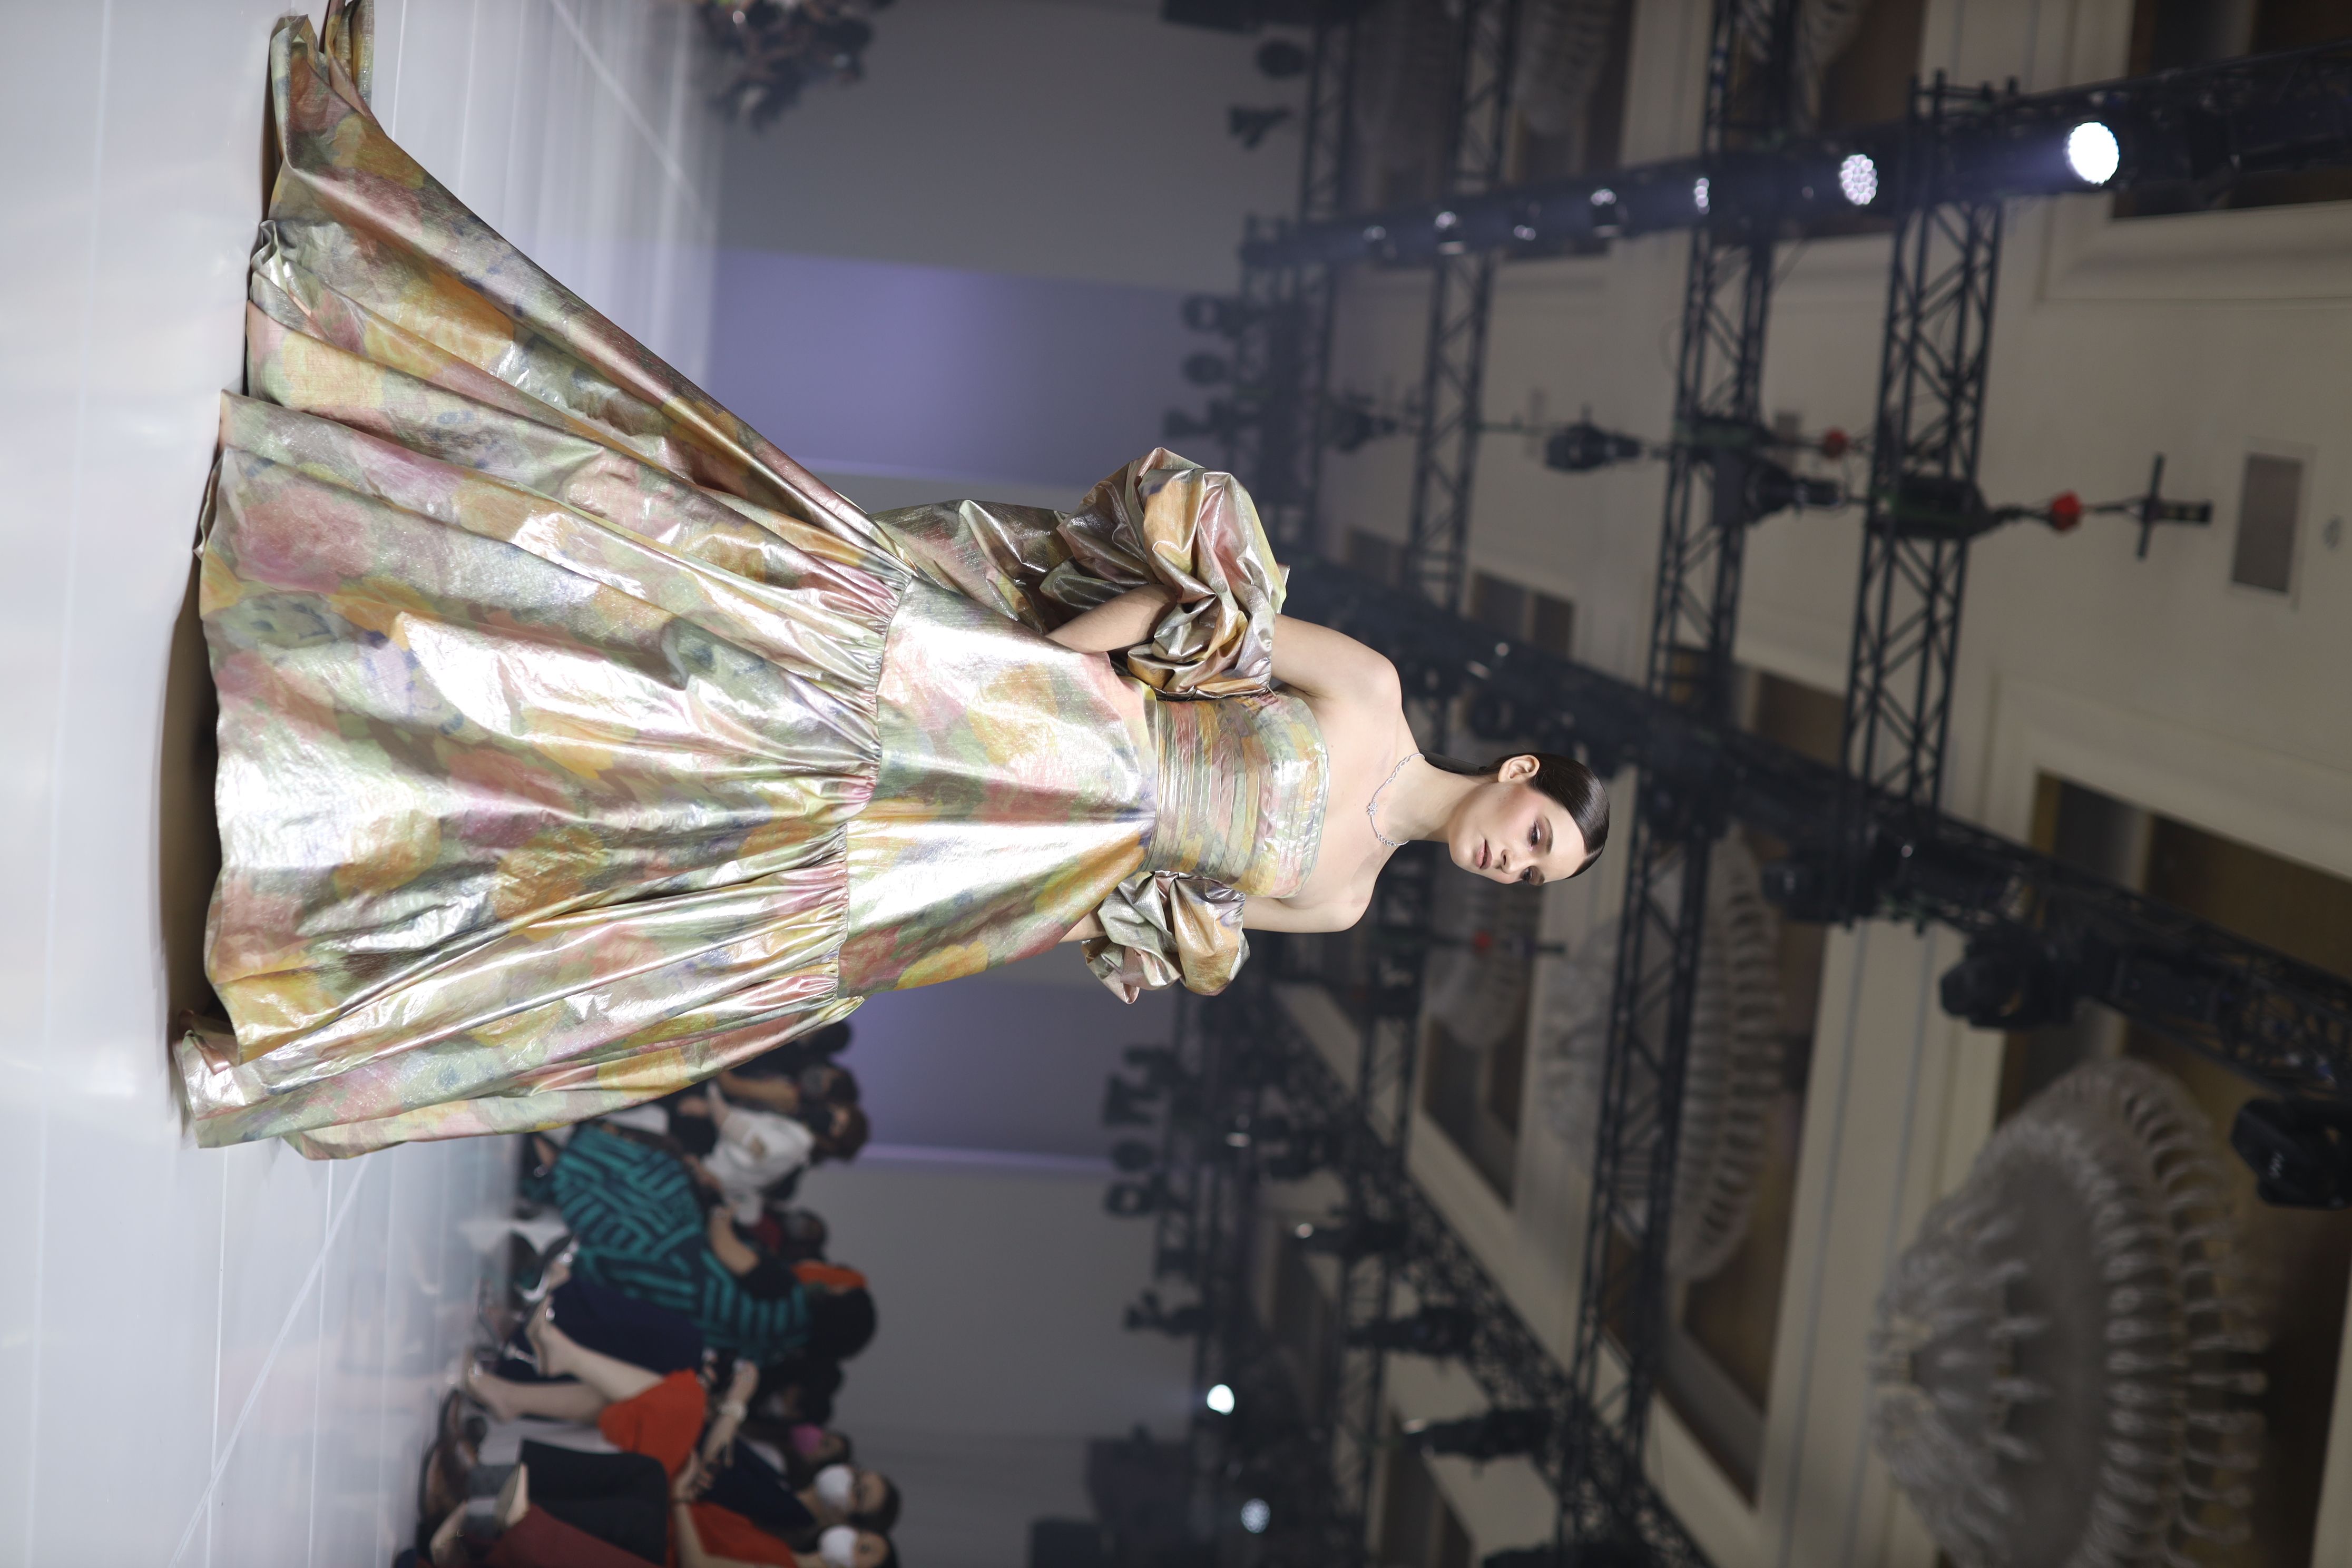 Didi Budiardjo Kembali Gelar Fashion Show Setelah Masa Pandemi